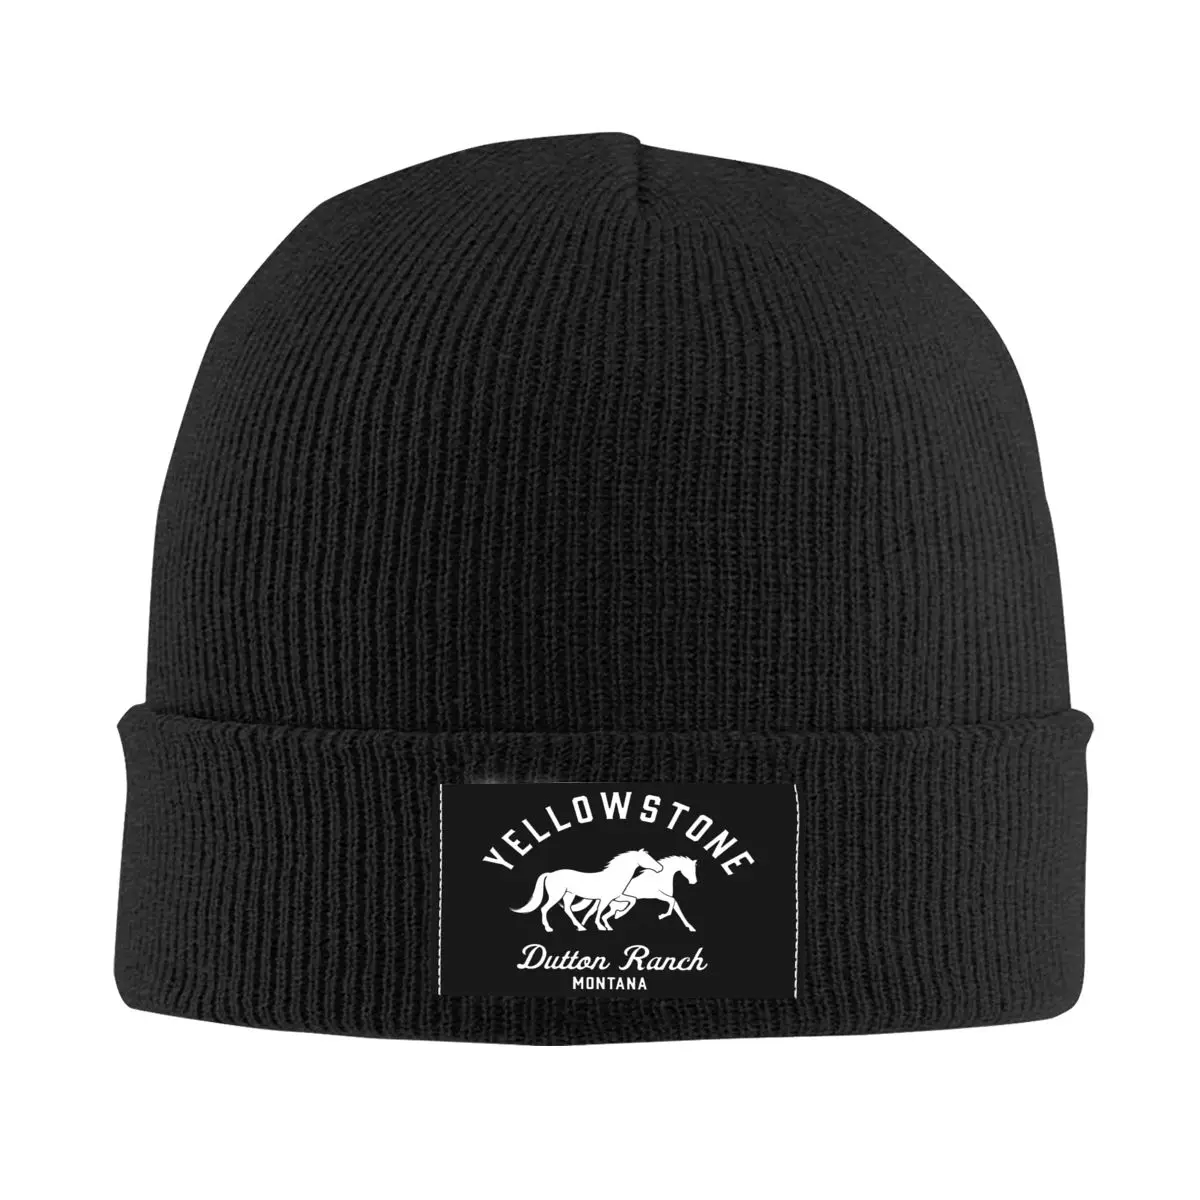 Dutton Ranch Yellowstone Skullies Beanies Caps Unisex Winter Warm Knitted Hat Women Men Cool Adult Bonnet Hats Outdoor Ski Cap 1